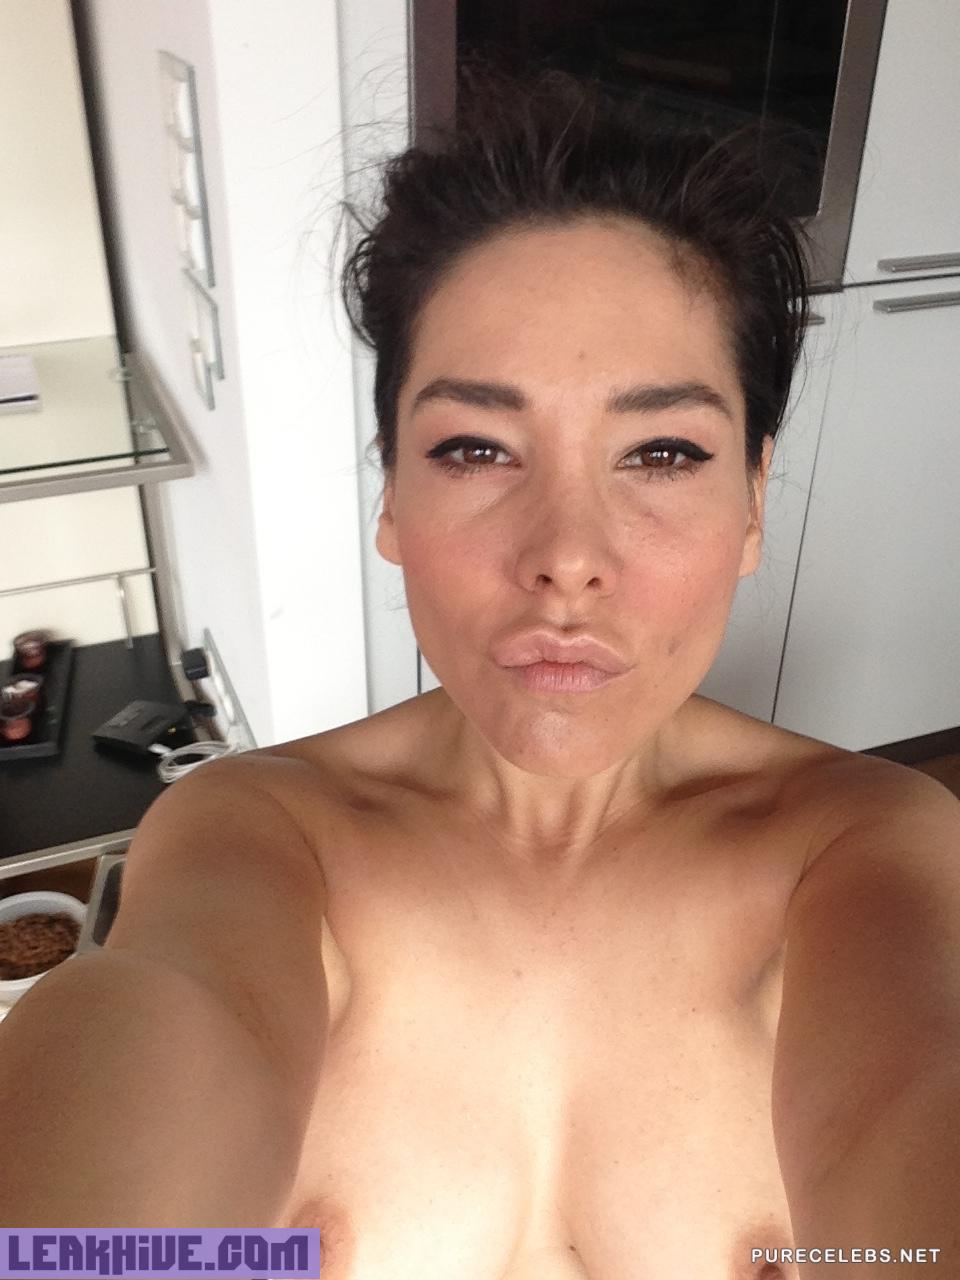 Leaked Sandra Ahrabian Leaked Frontal Naked Selfie Photos